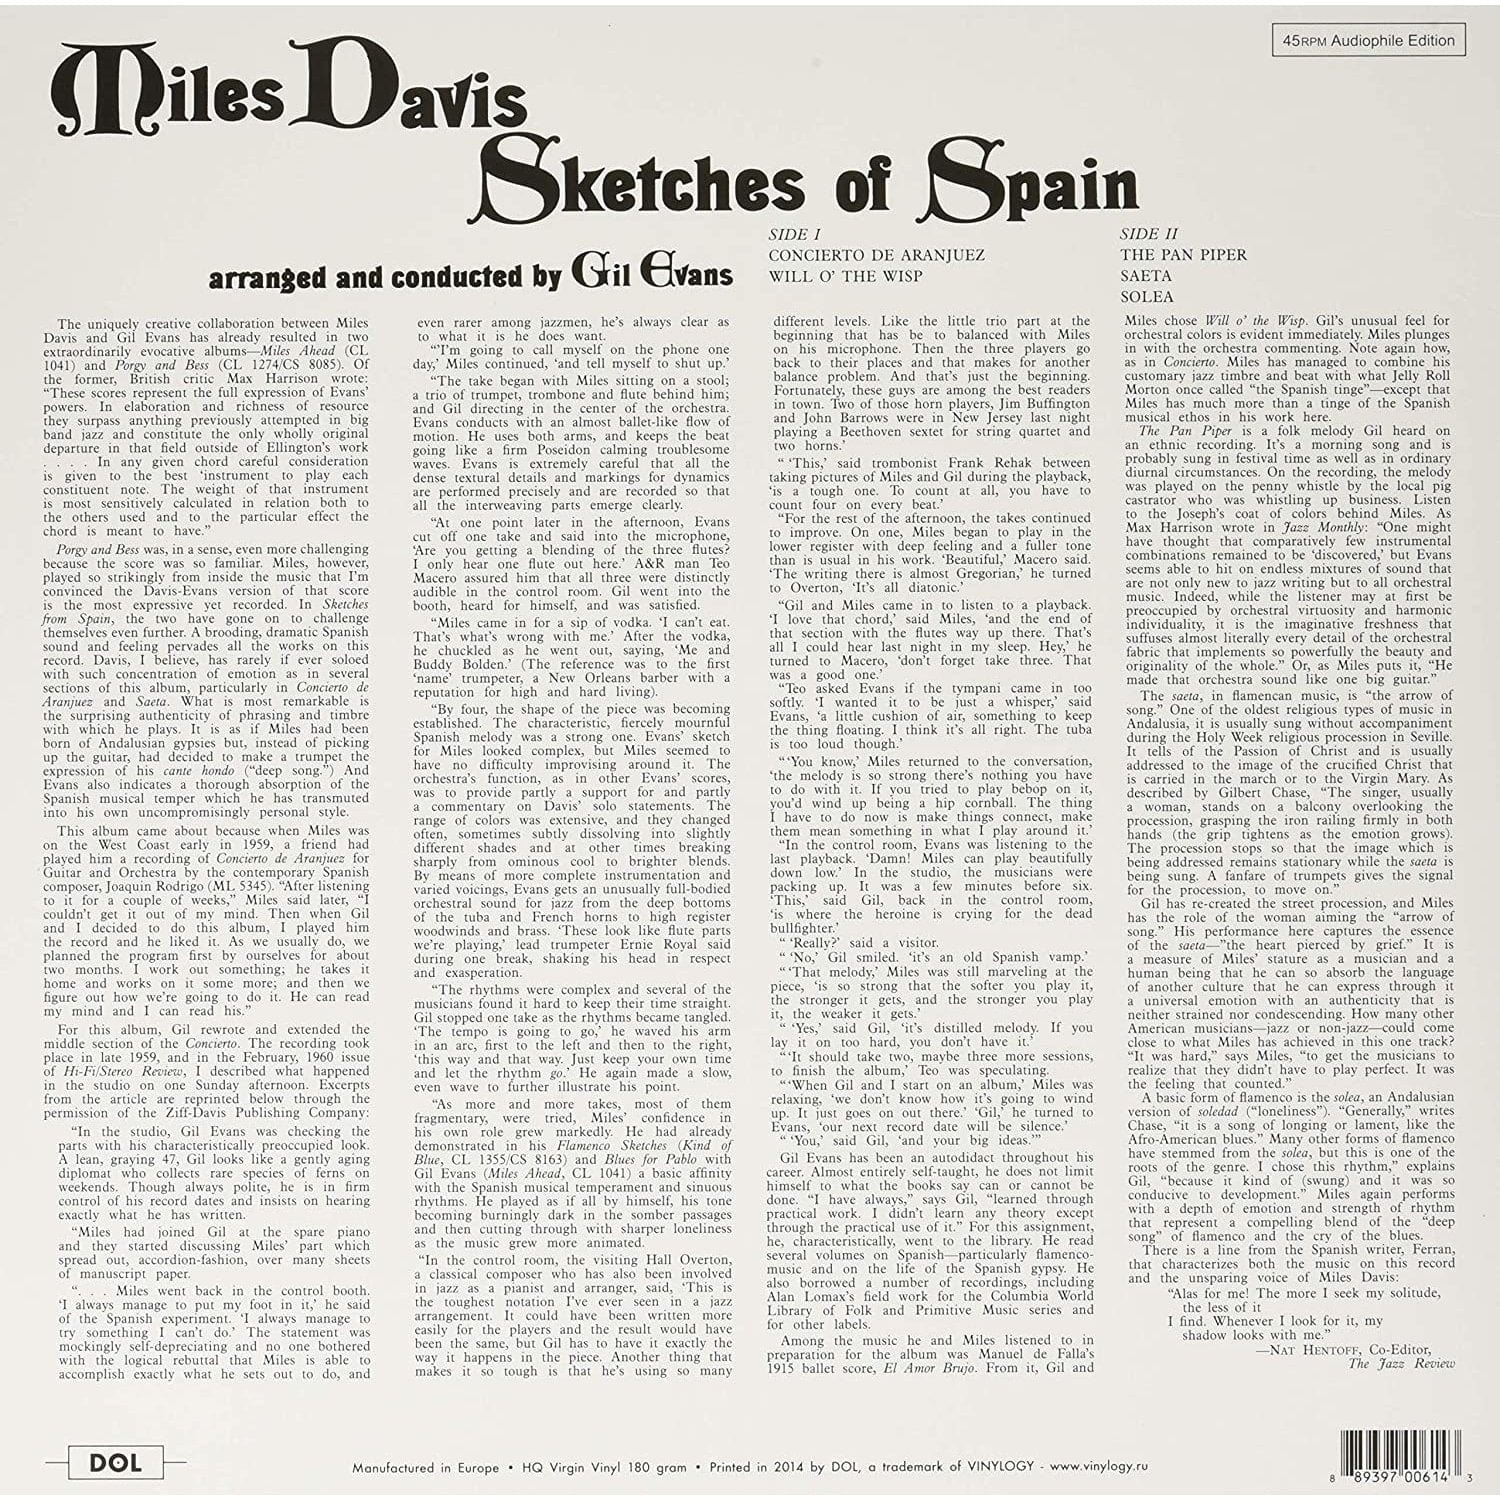 MILES DAVIS - SKETCHES OF SPAIN [LIMITED BLUE VINYL]